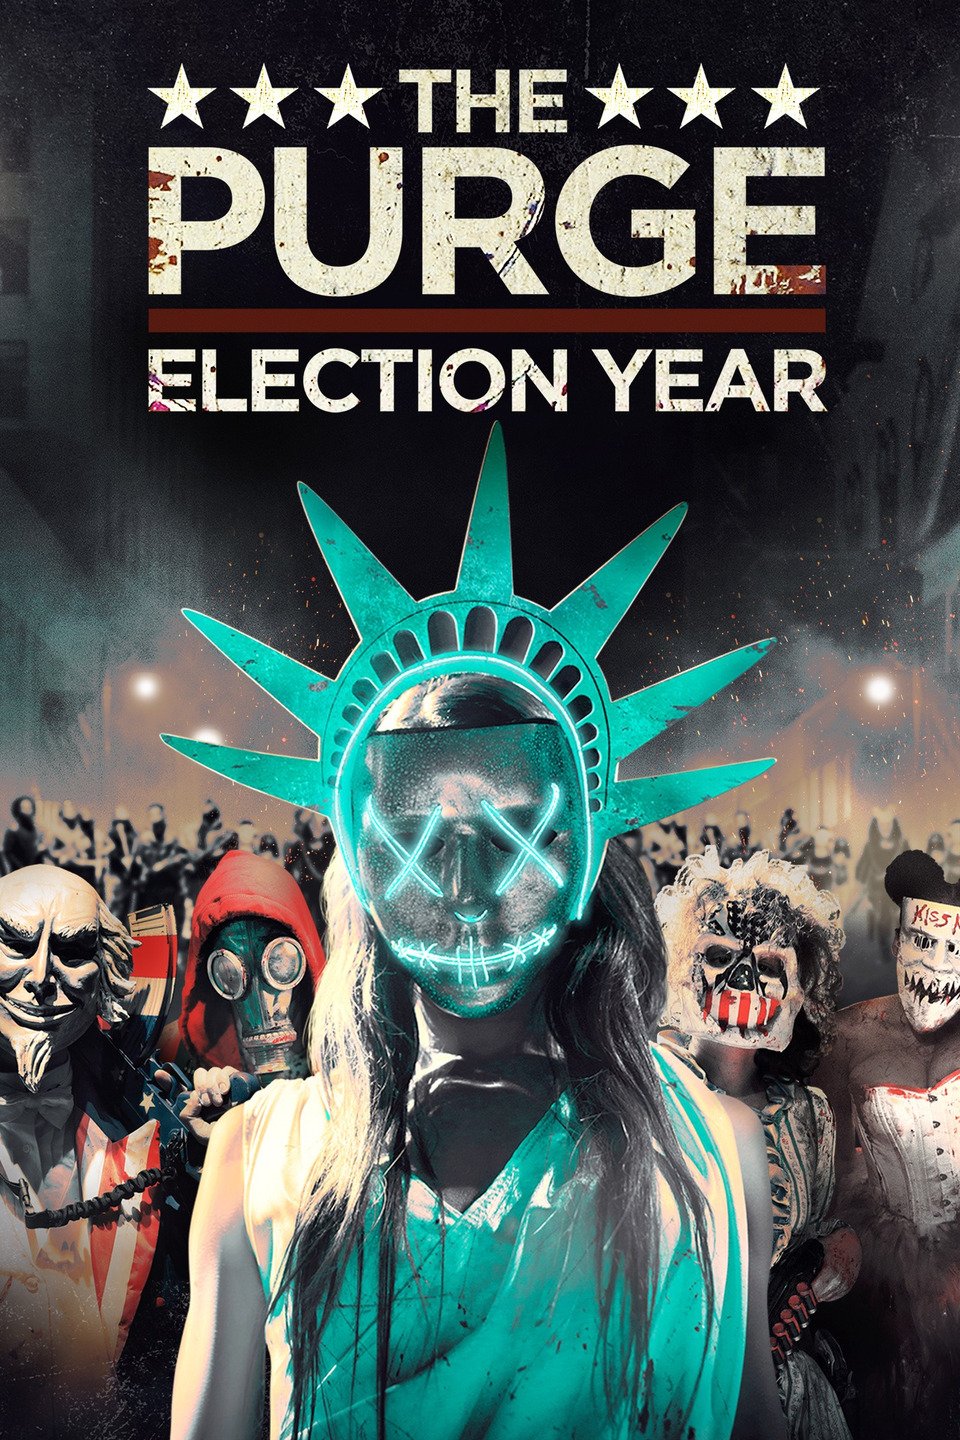 [MINI Super-HQ] The Purge Election Year (2016) คืนอำมหิต ปีเลือกตั้งโหด ภาค 3 [1080p] [พากย์ไทย DTS + เสียงอังกฤษ DTS] [บรรยายไทย + อังกฤษ] [เสียงไทย + ซับไทย]